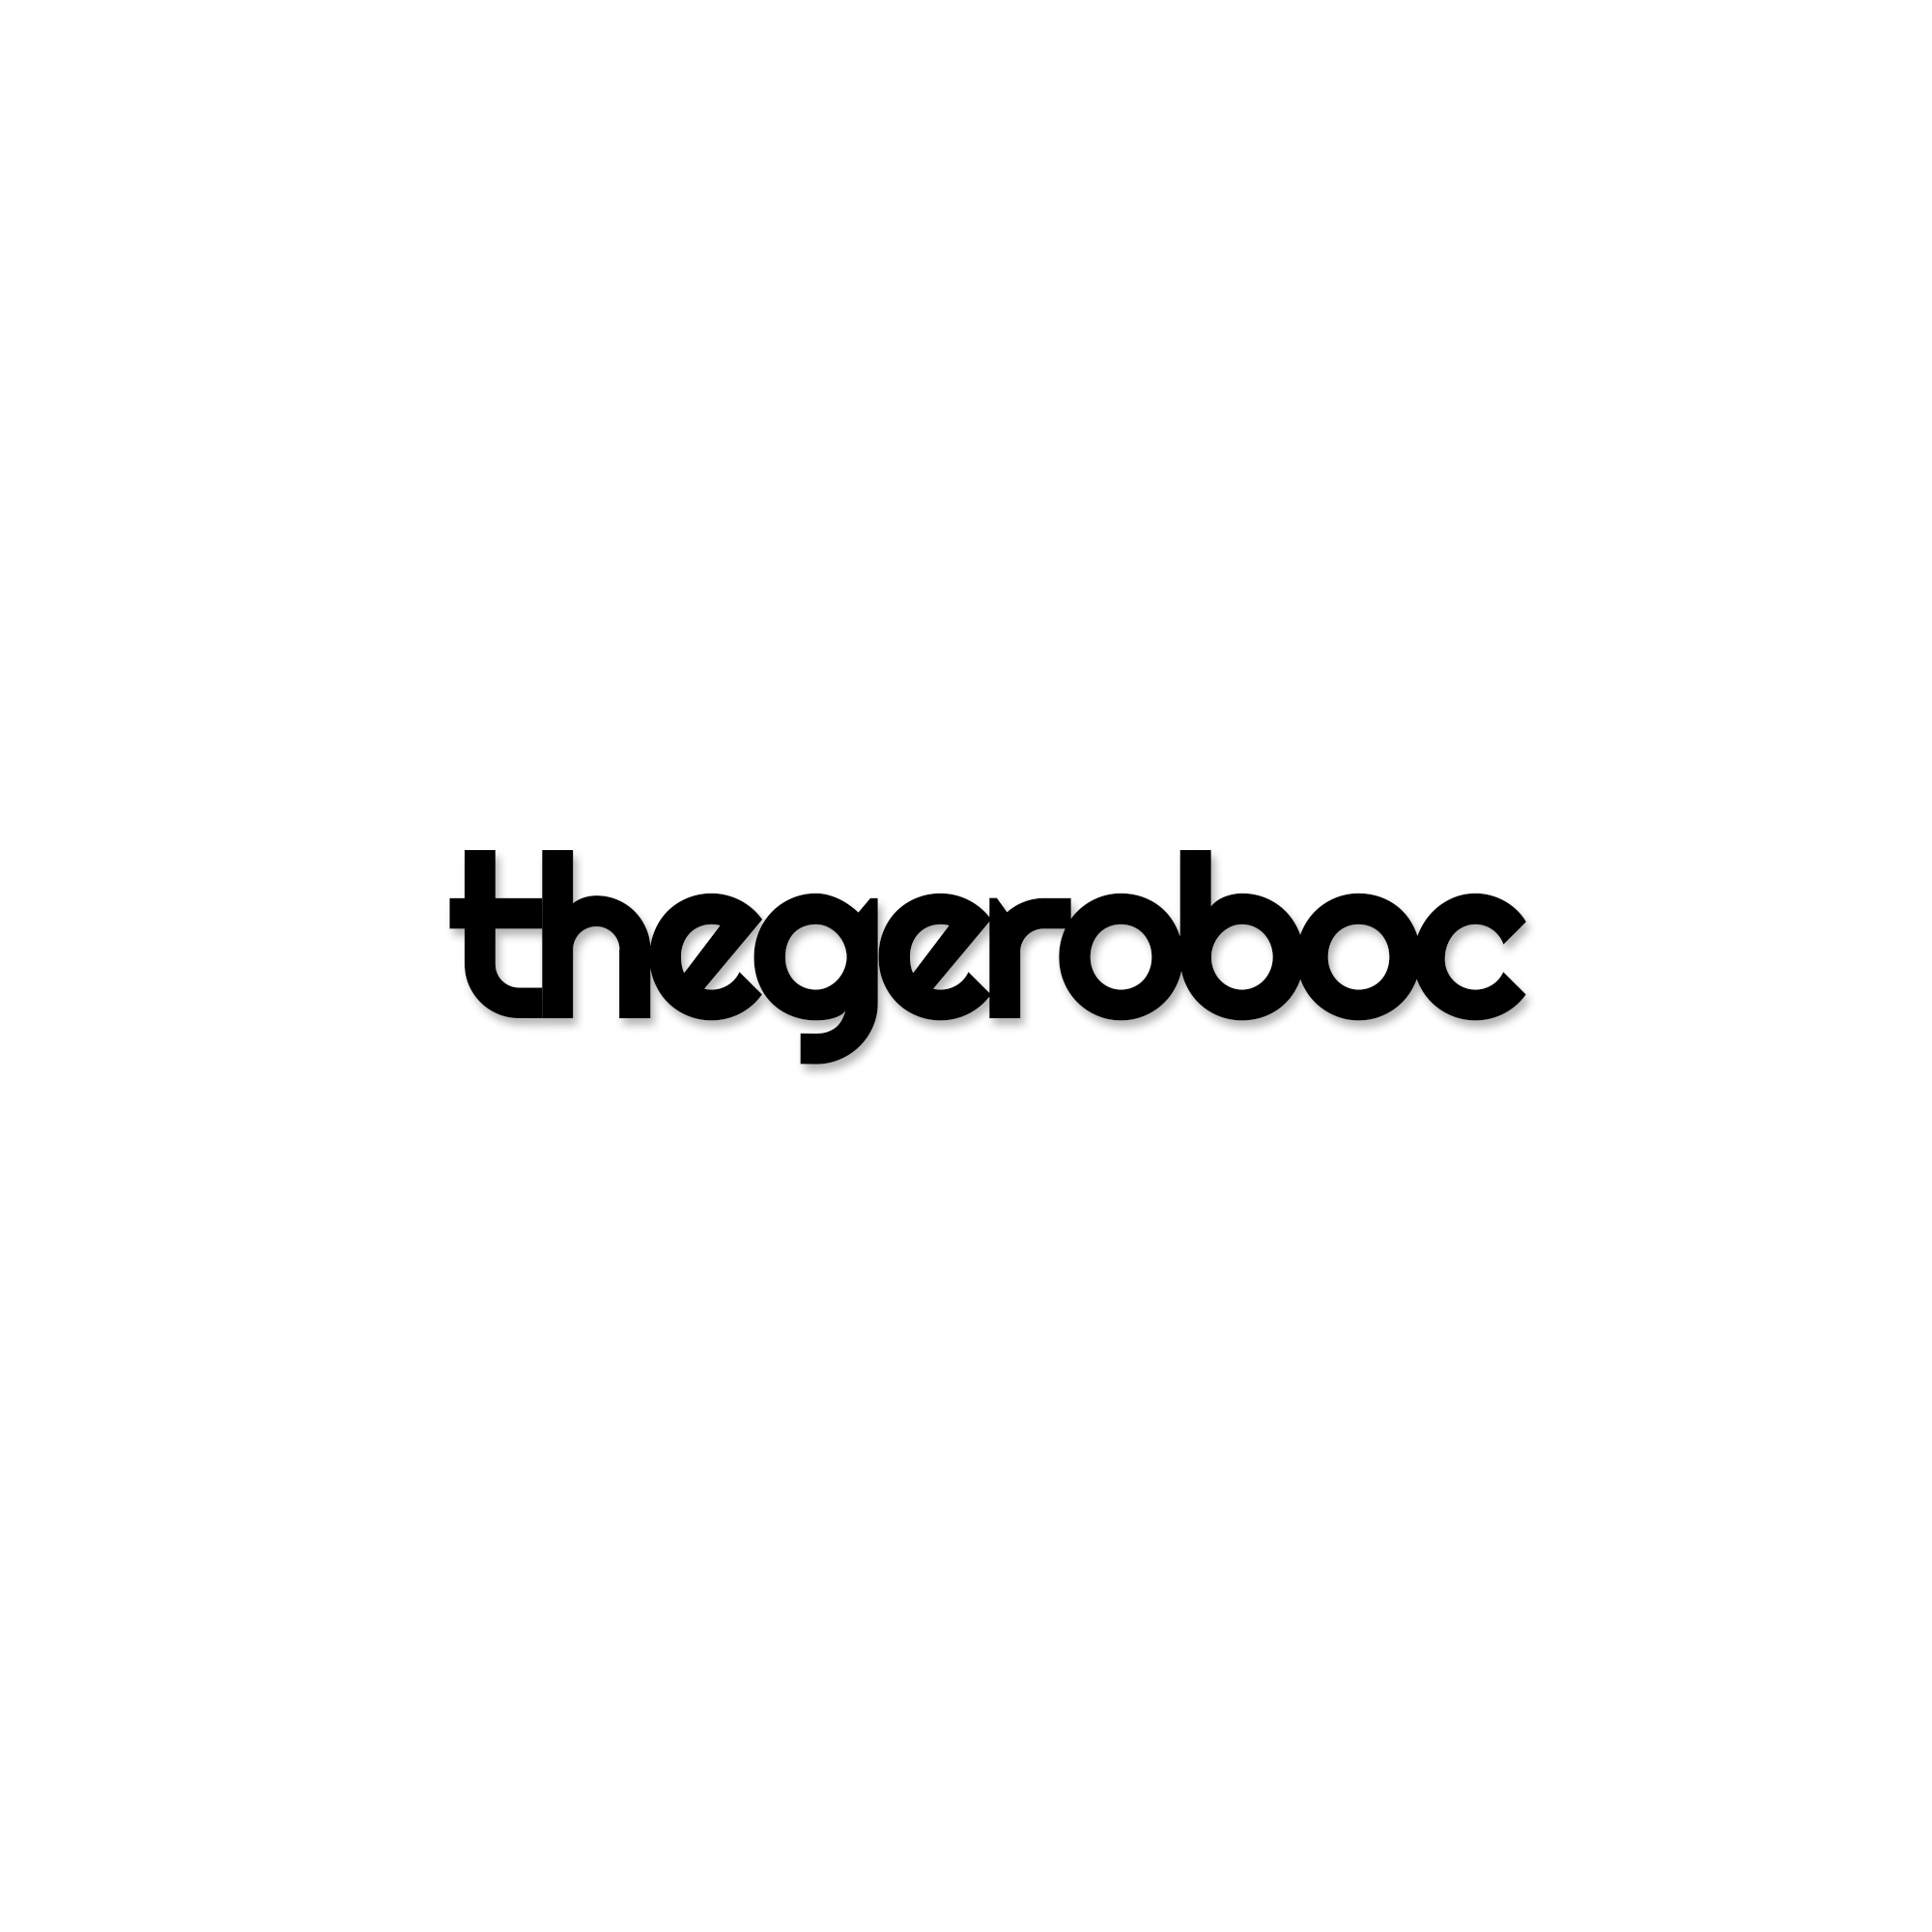 Thegeroboc